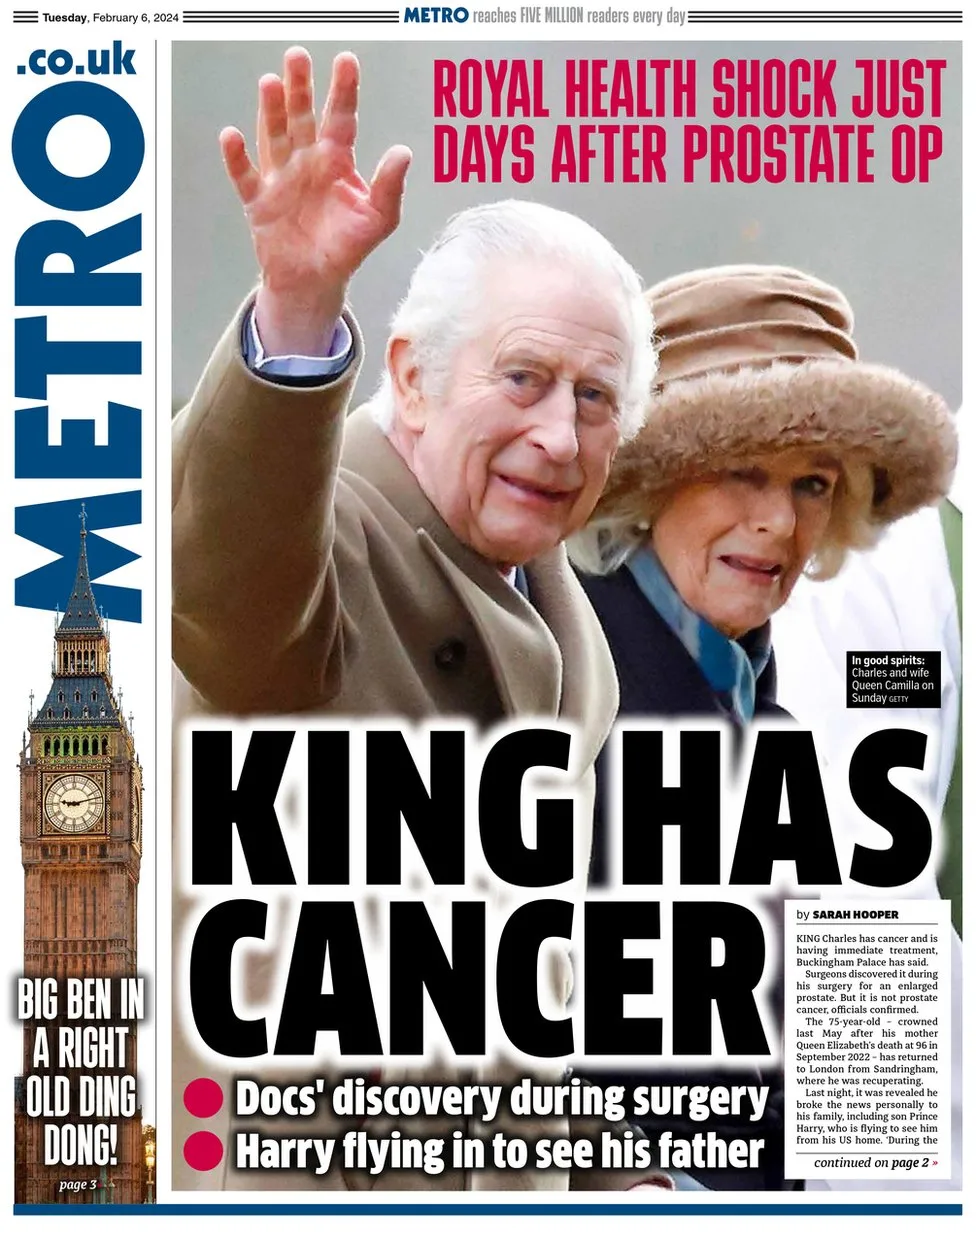 Metro - King has cancer 